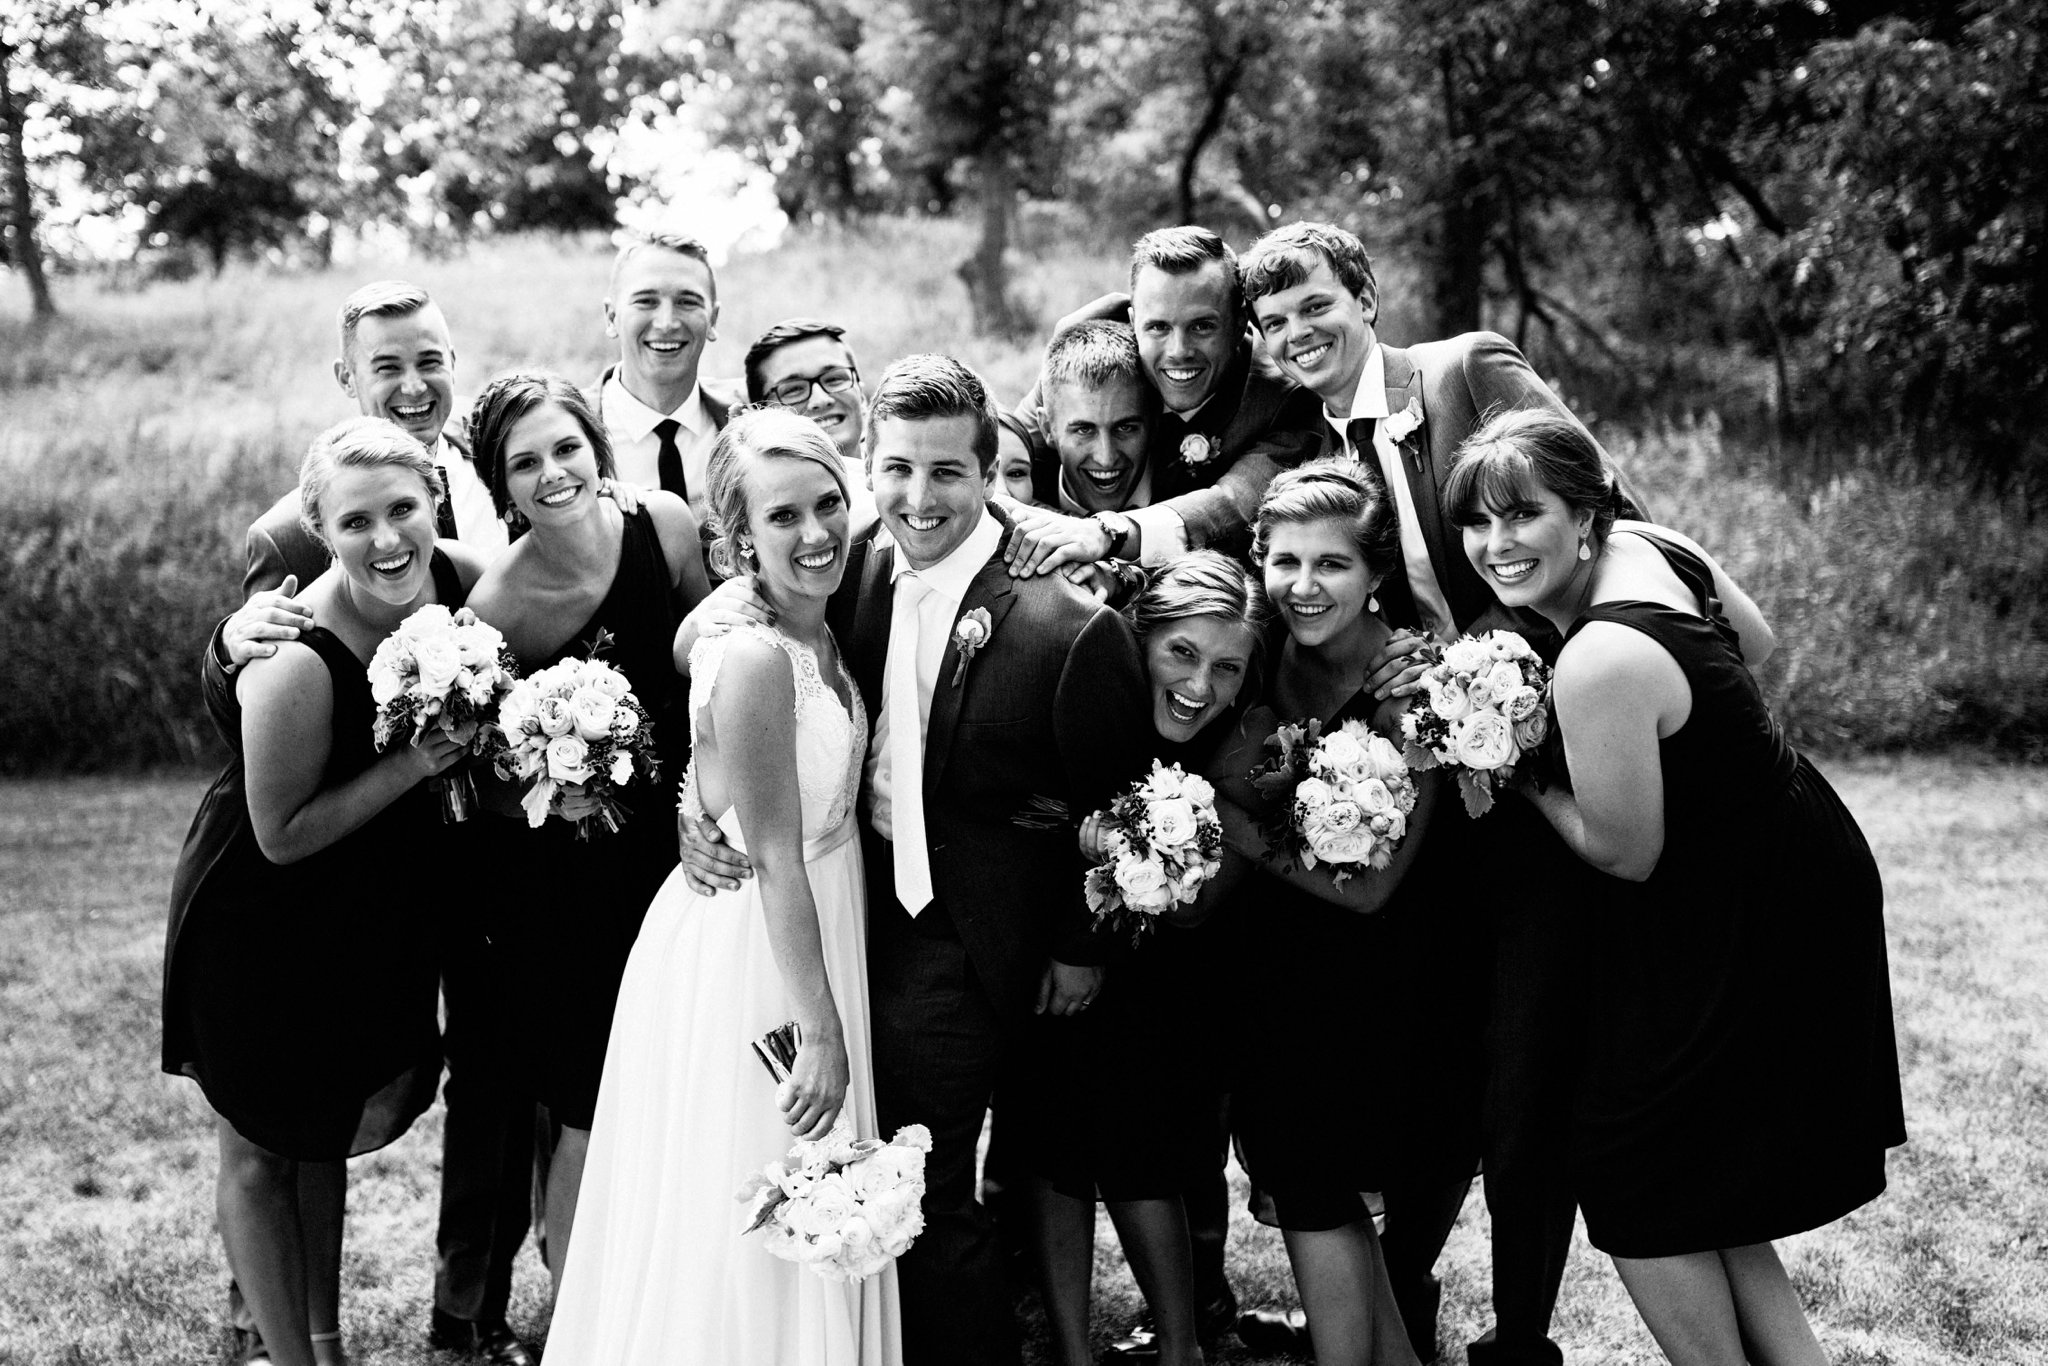 Sioux Falls Wedding Photos | Destination Photographer | Felicia The Photographer | Mary Jo Wegner Arboretum | Bridal Party | Black and White | fun | Casual